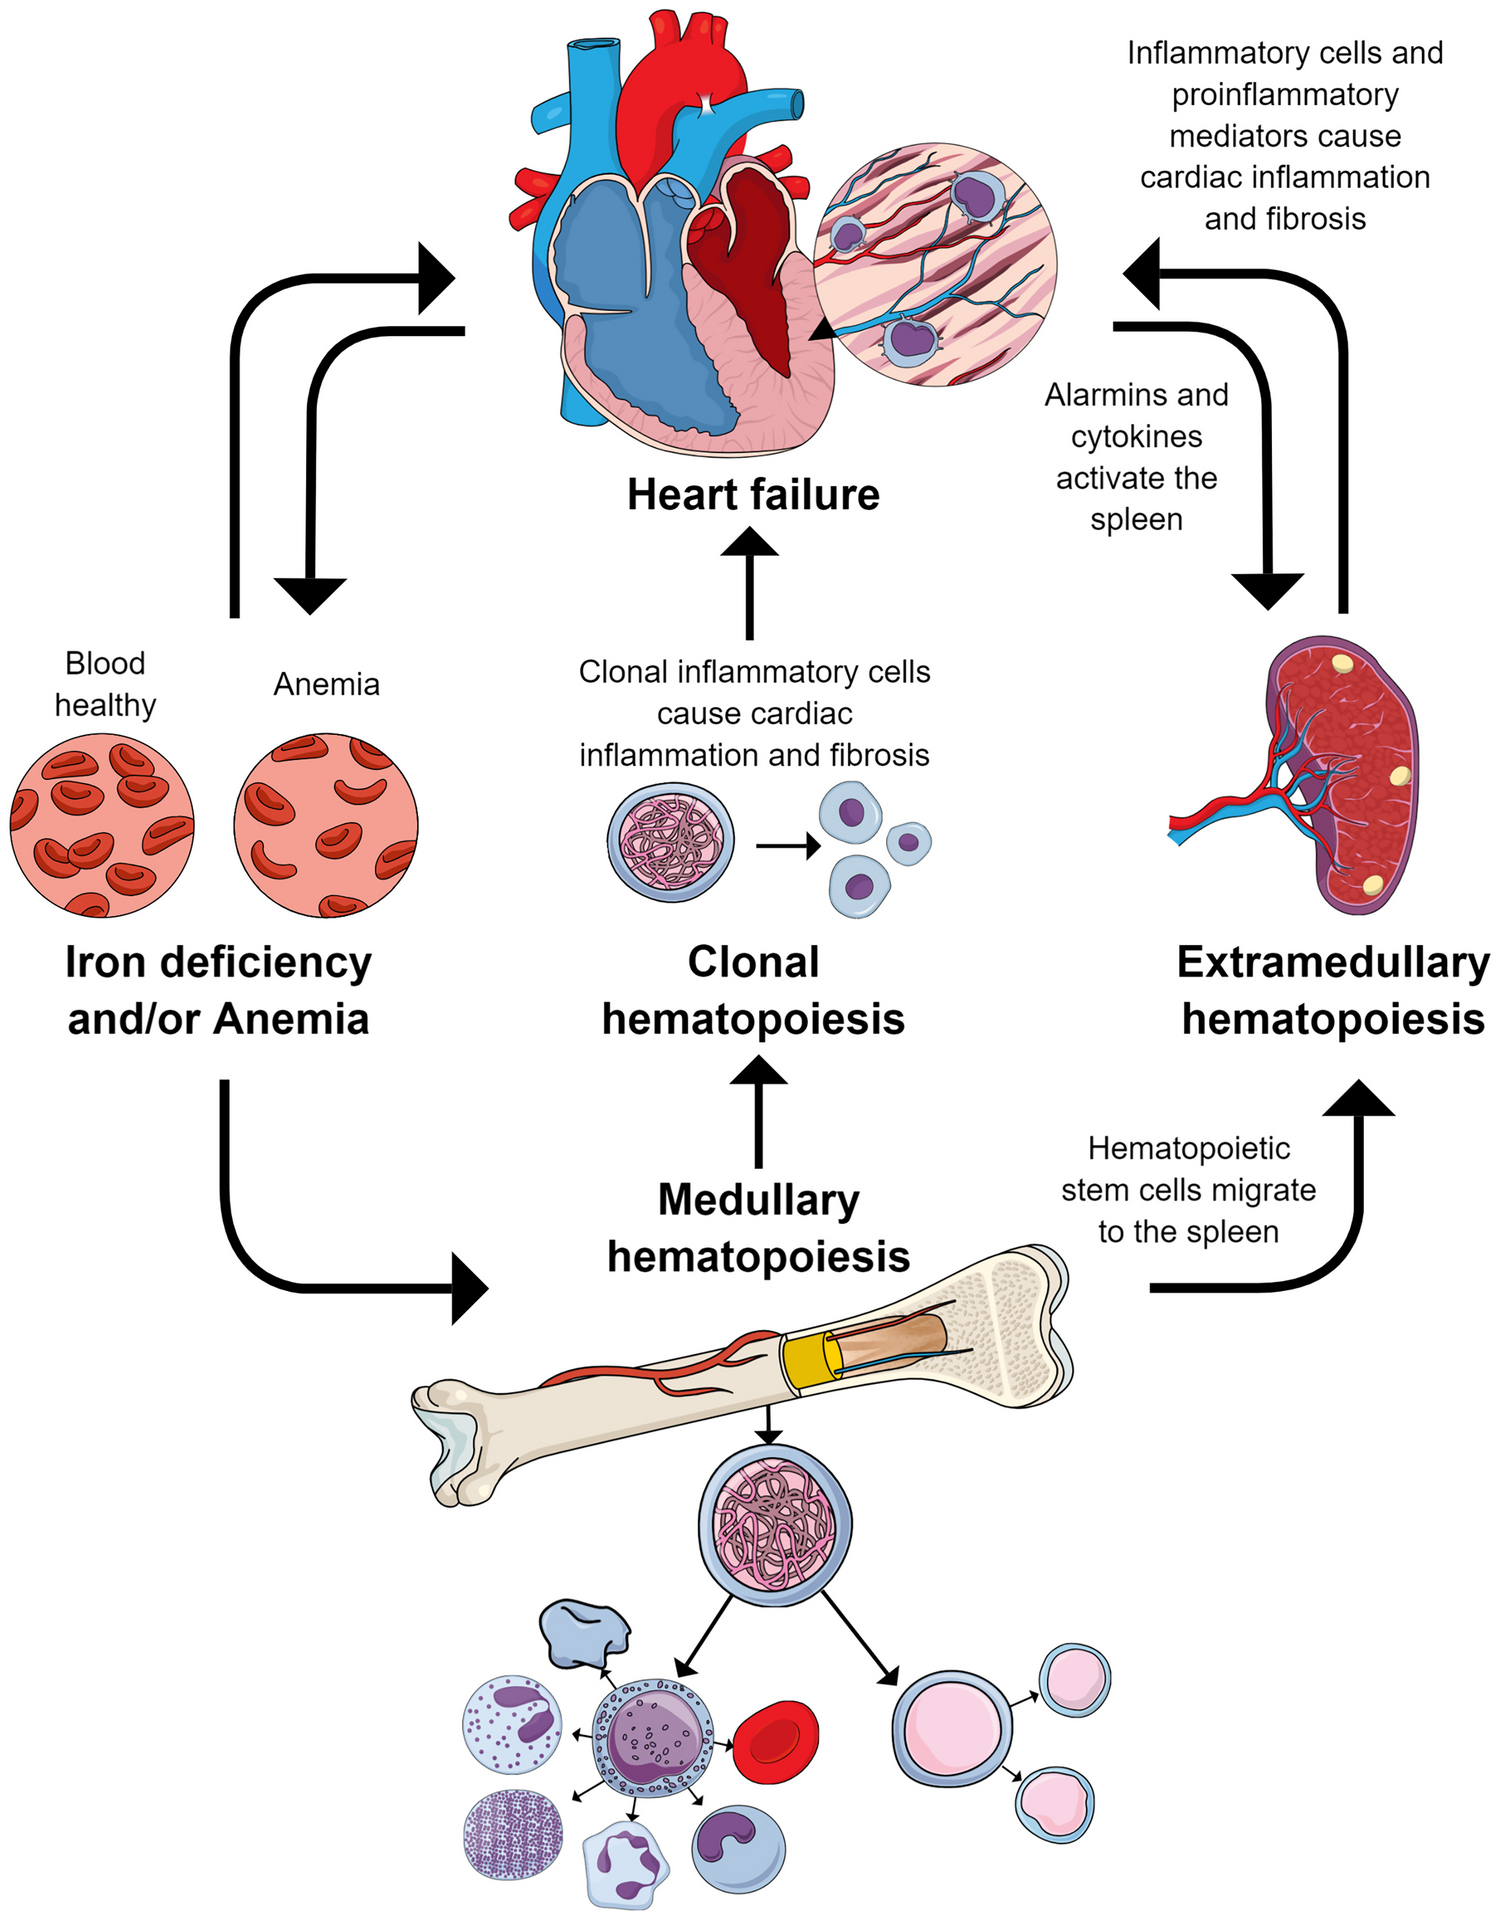 Interplay of the heart, spleen, and bone marrow in heart failure: the role of splenic extramedullary hematopoiesis